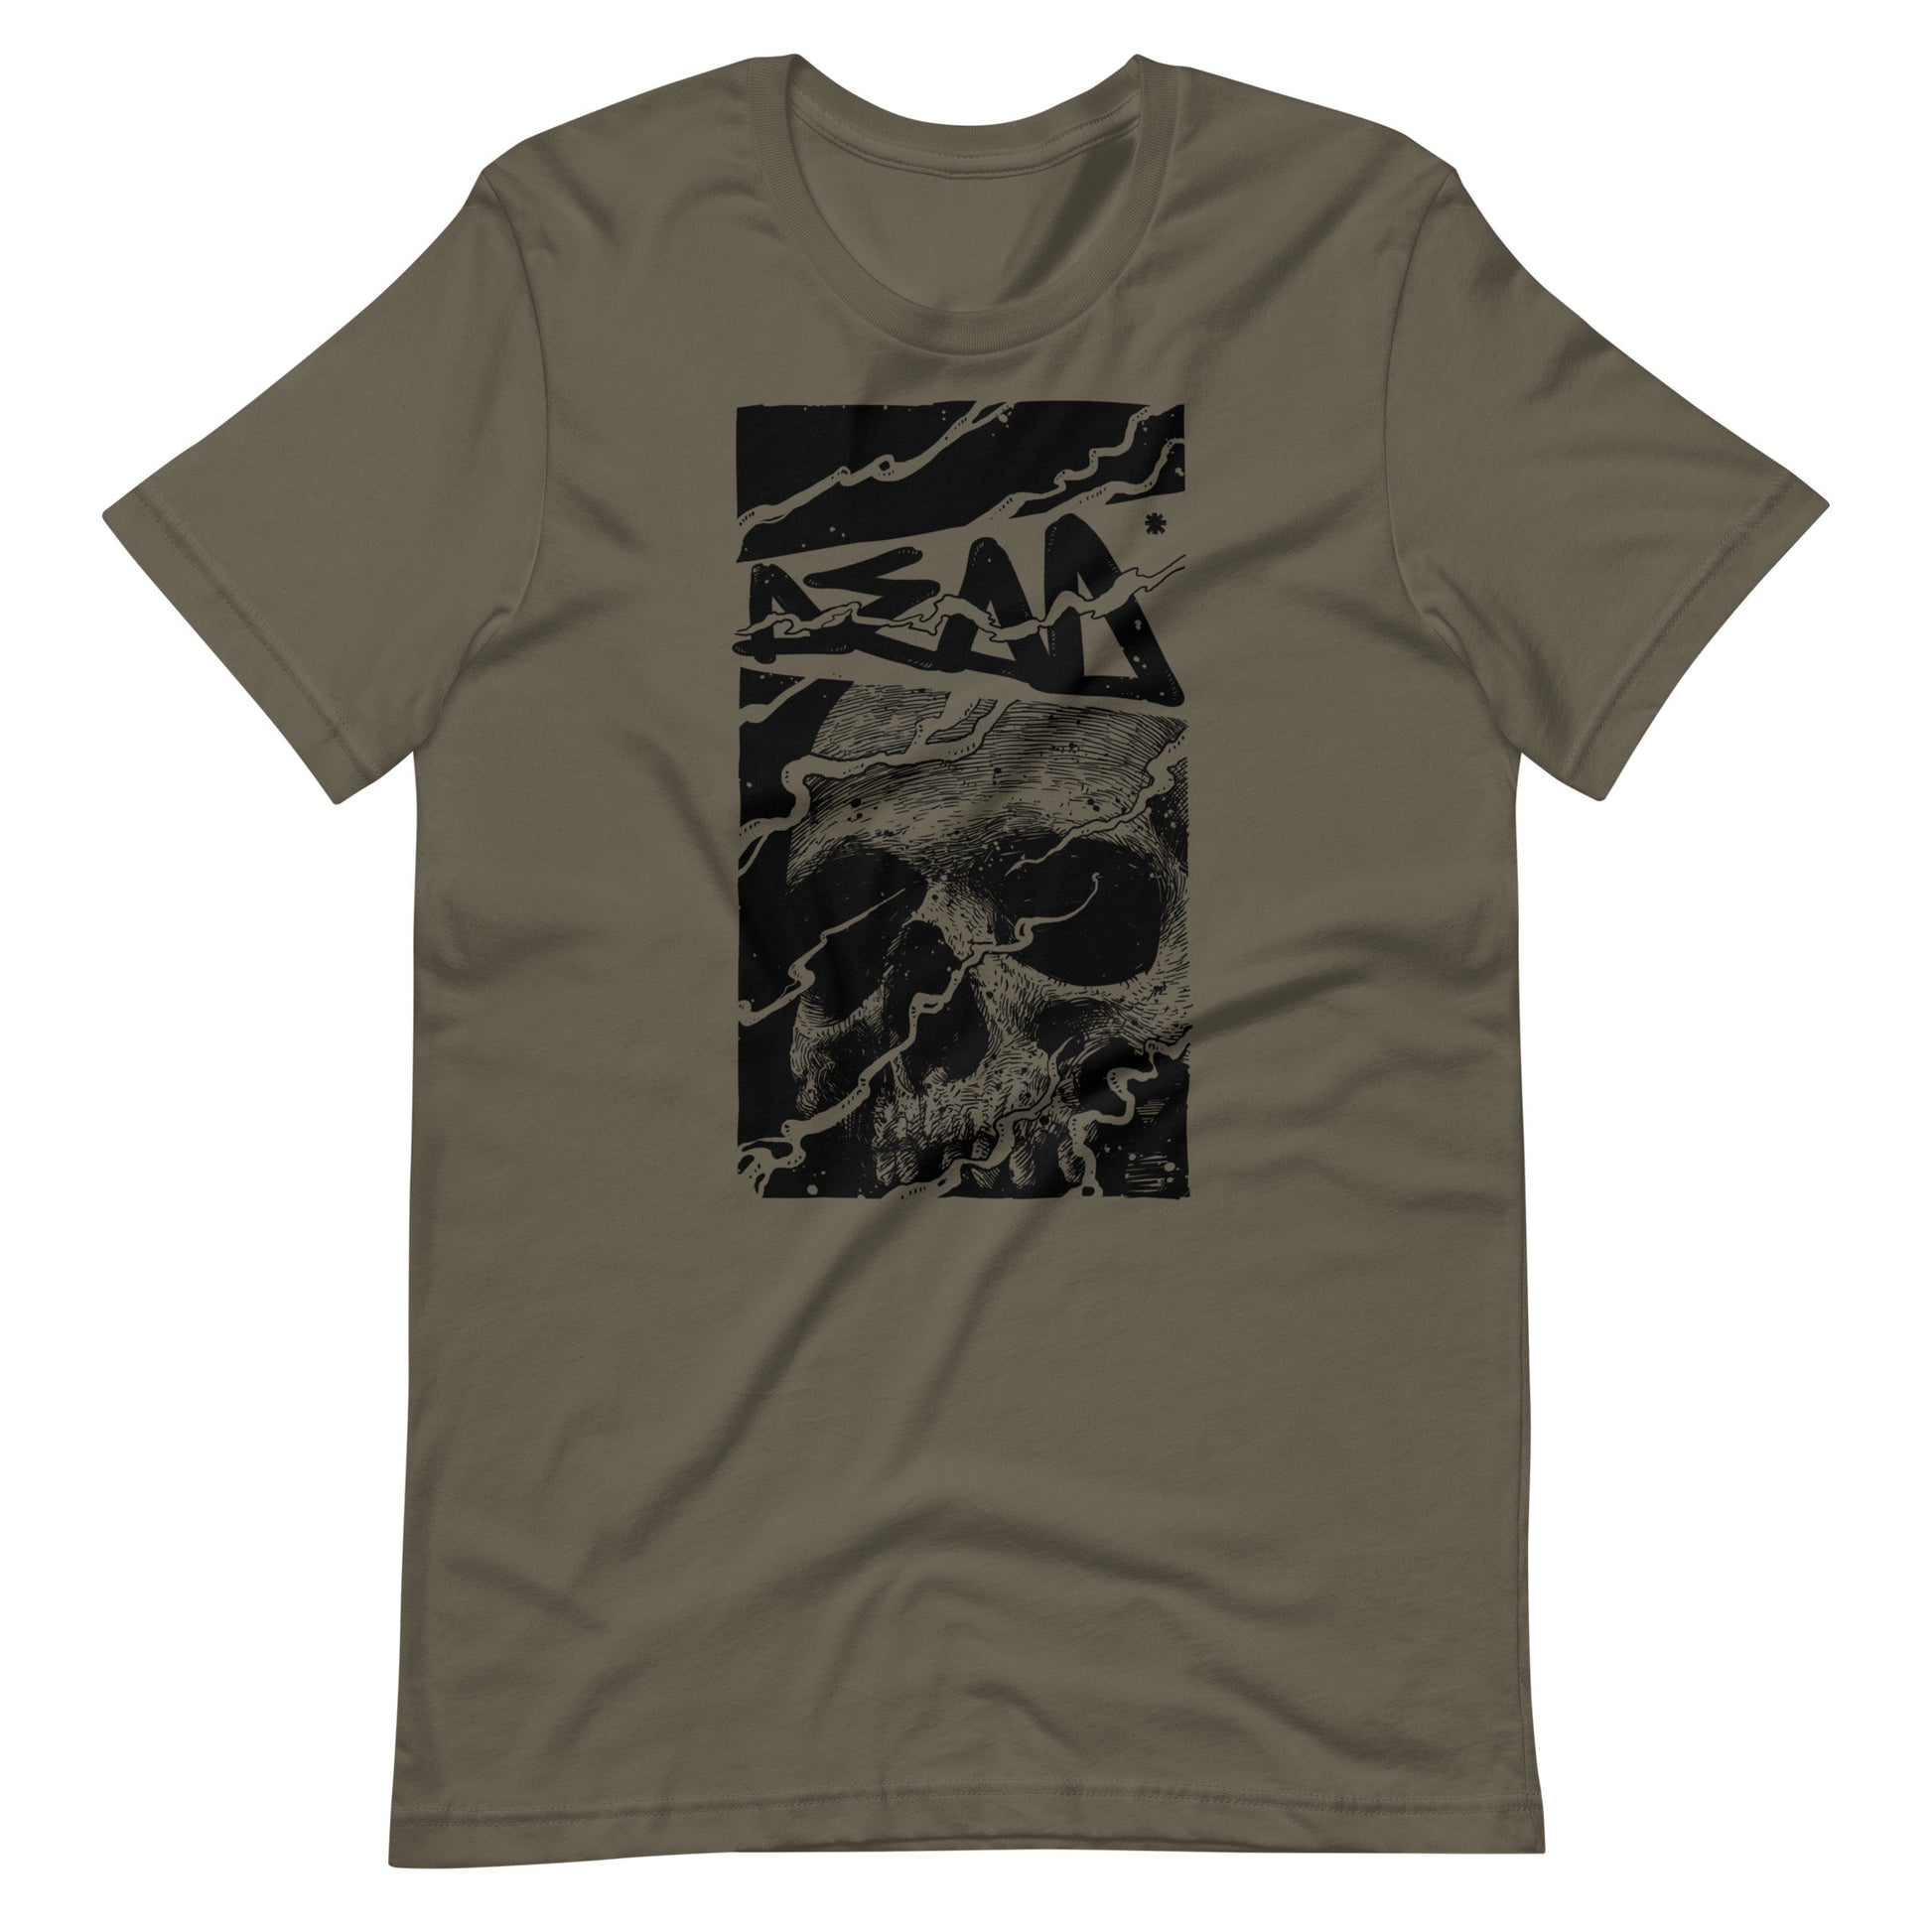 Skull Dead Black - Men's t-shirt - Army Front